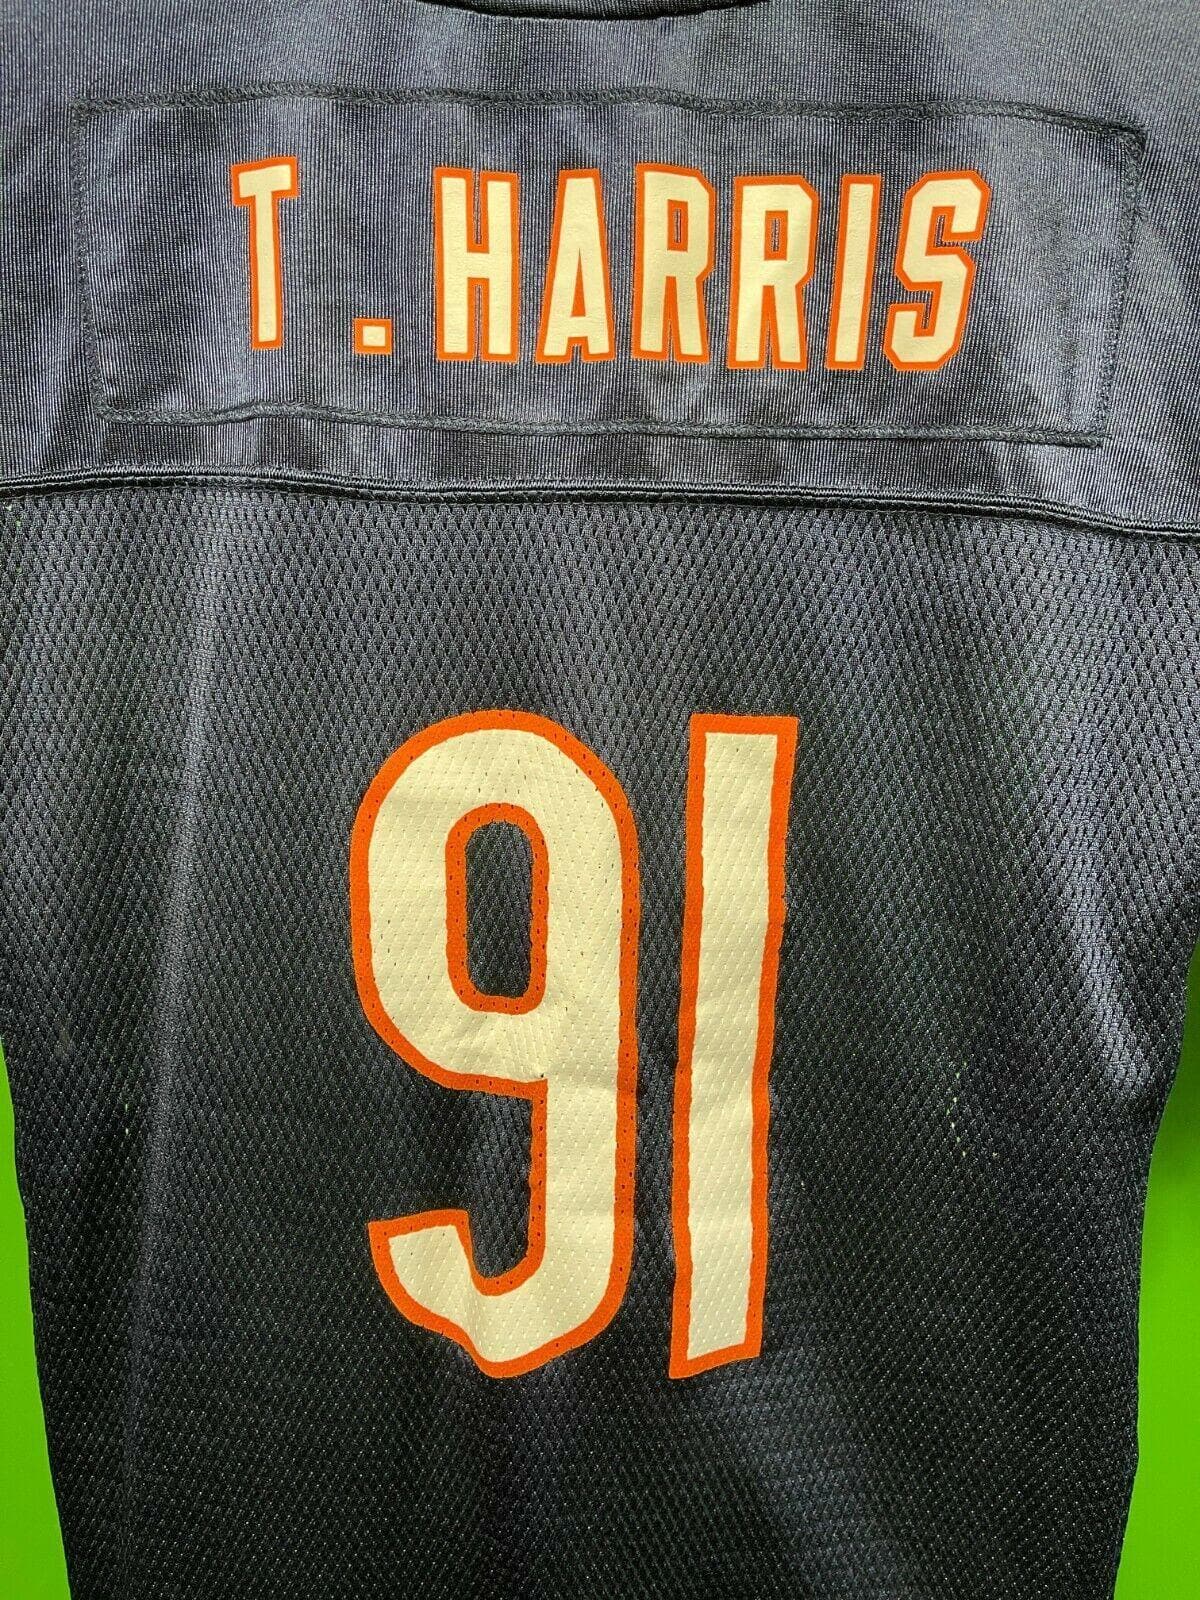 NFL Chicago Bears Tommie Harris #91 Reebok Jersey Youth XL 18-20